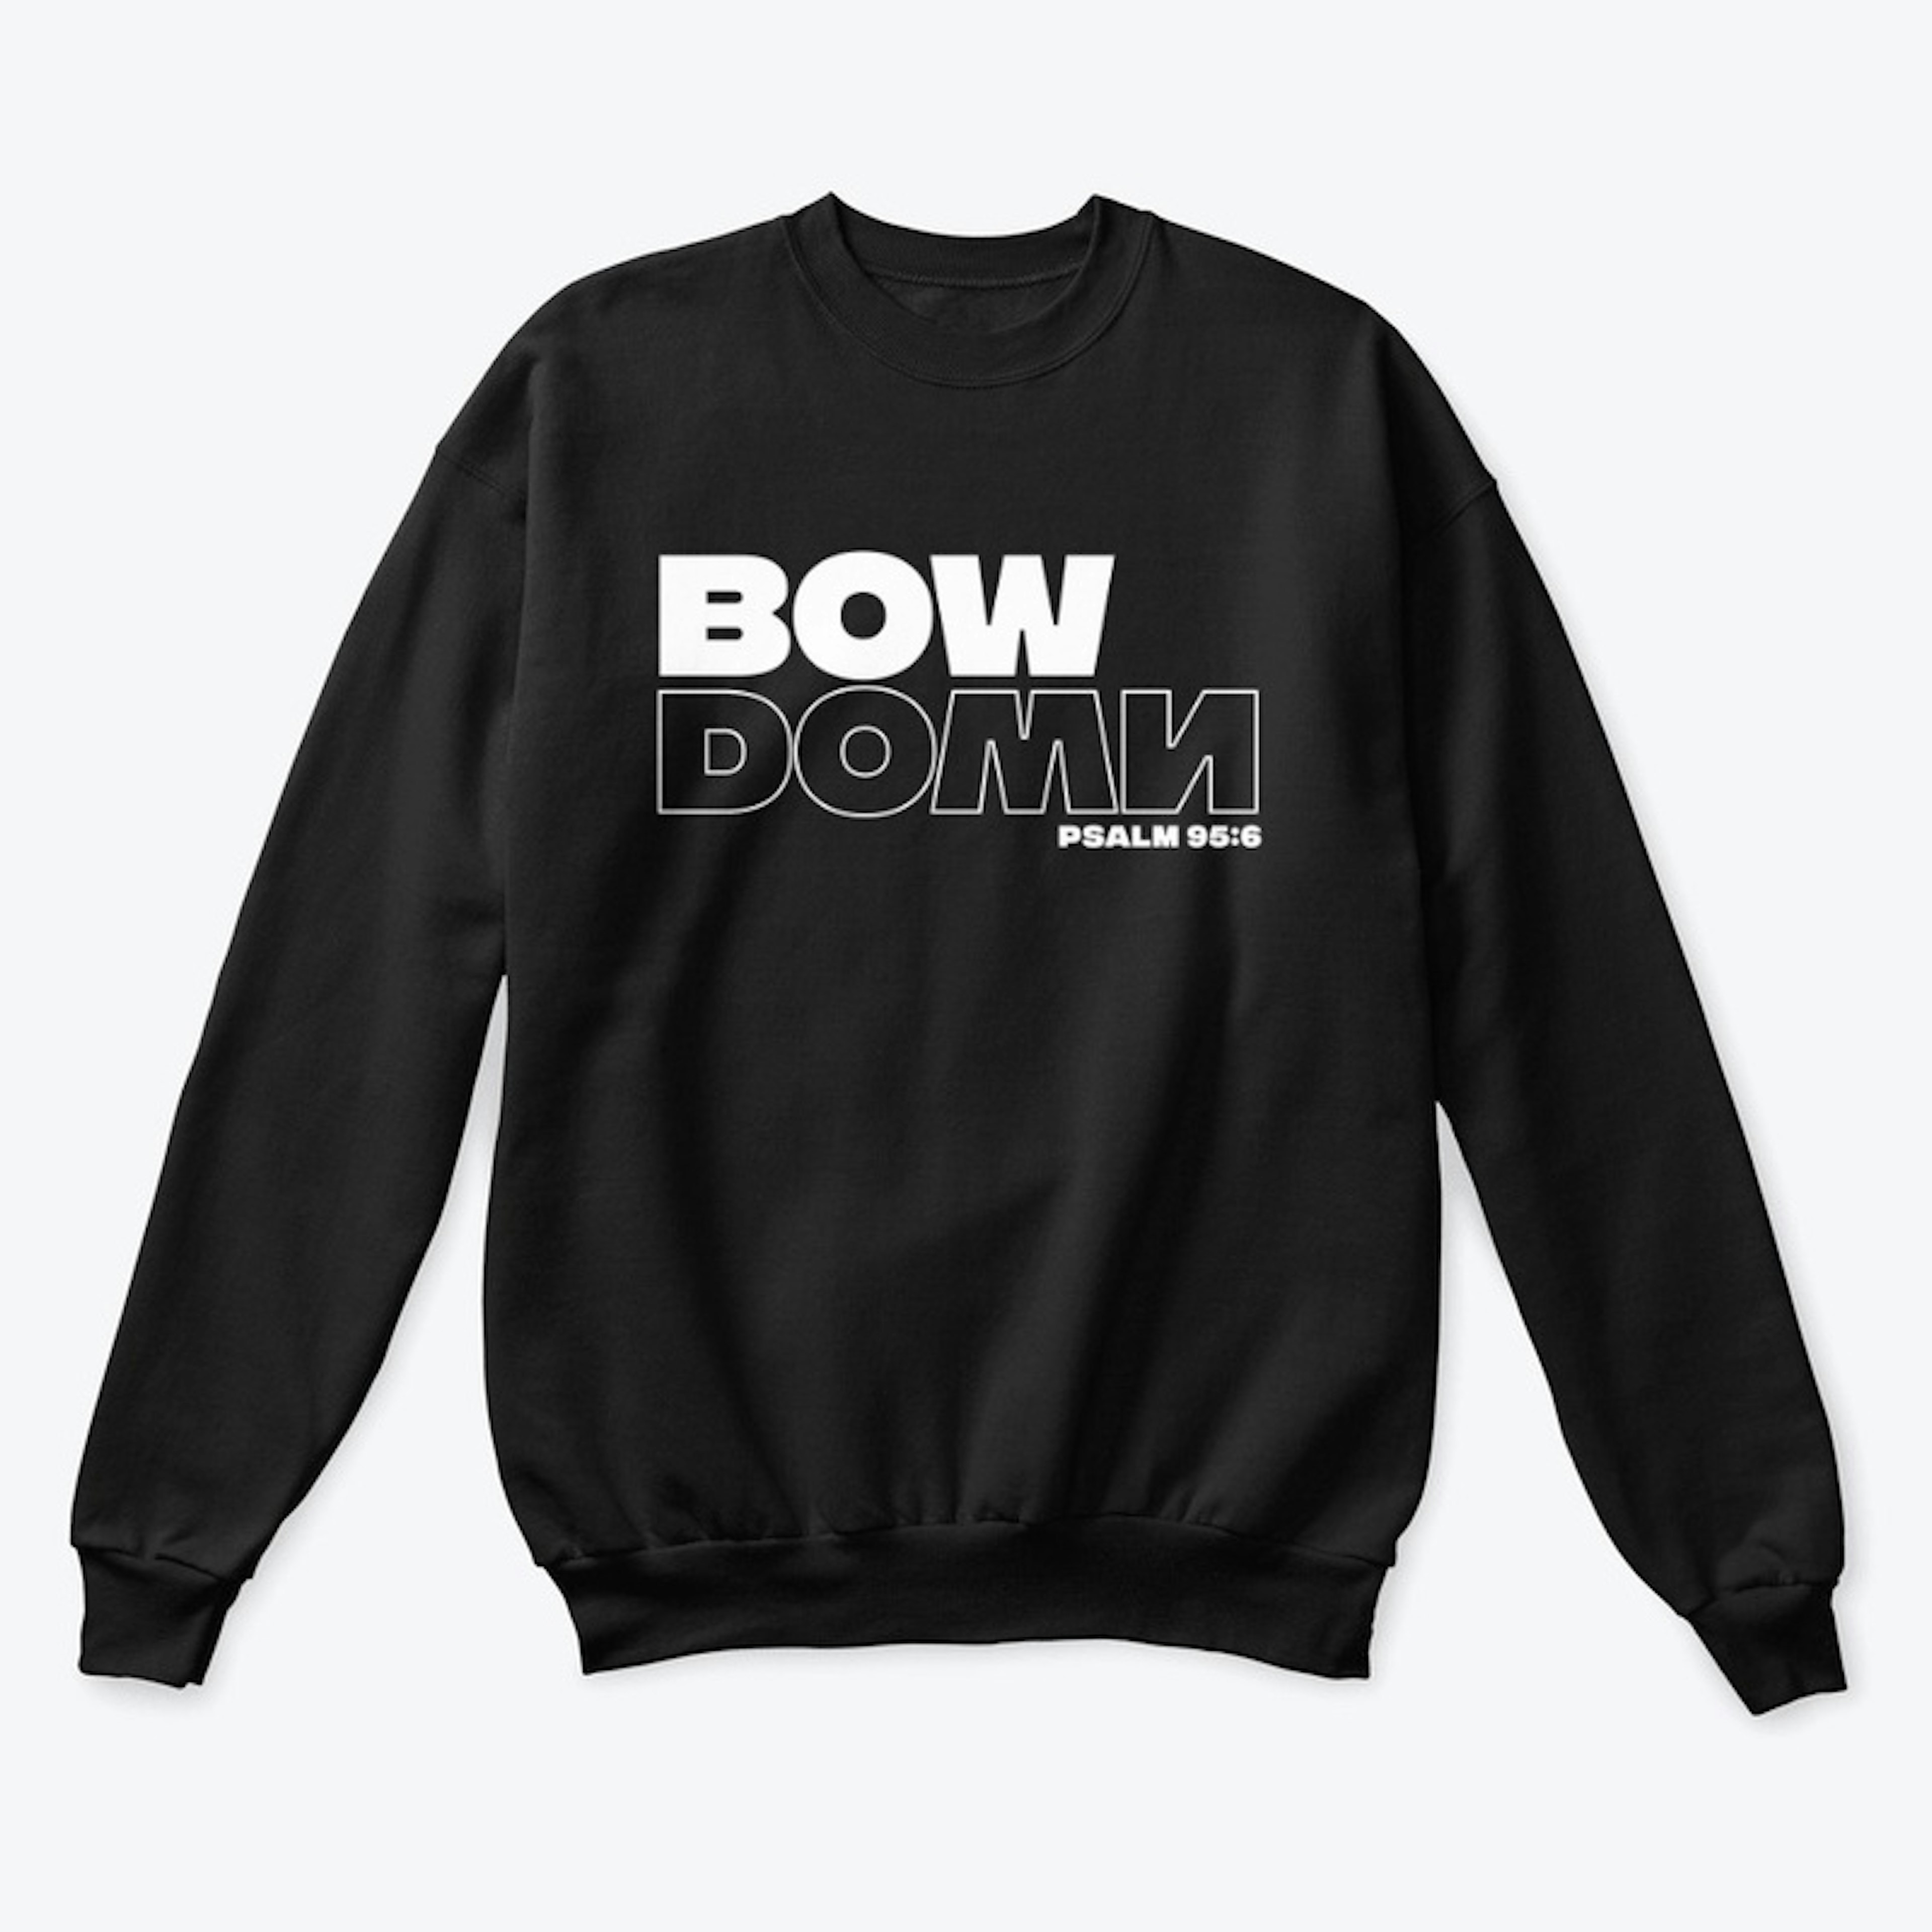 Classic Crewneck Bow Down Sweatshirt